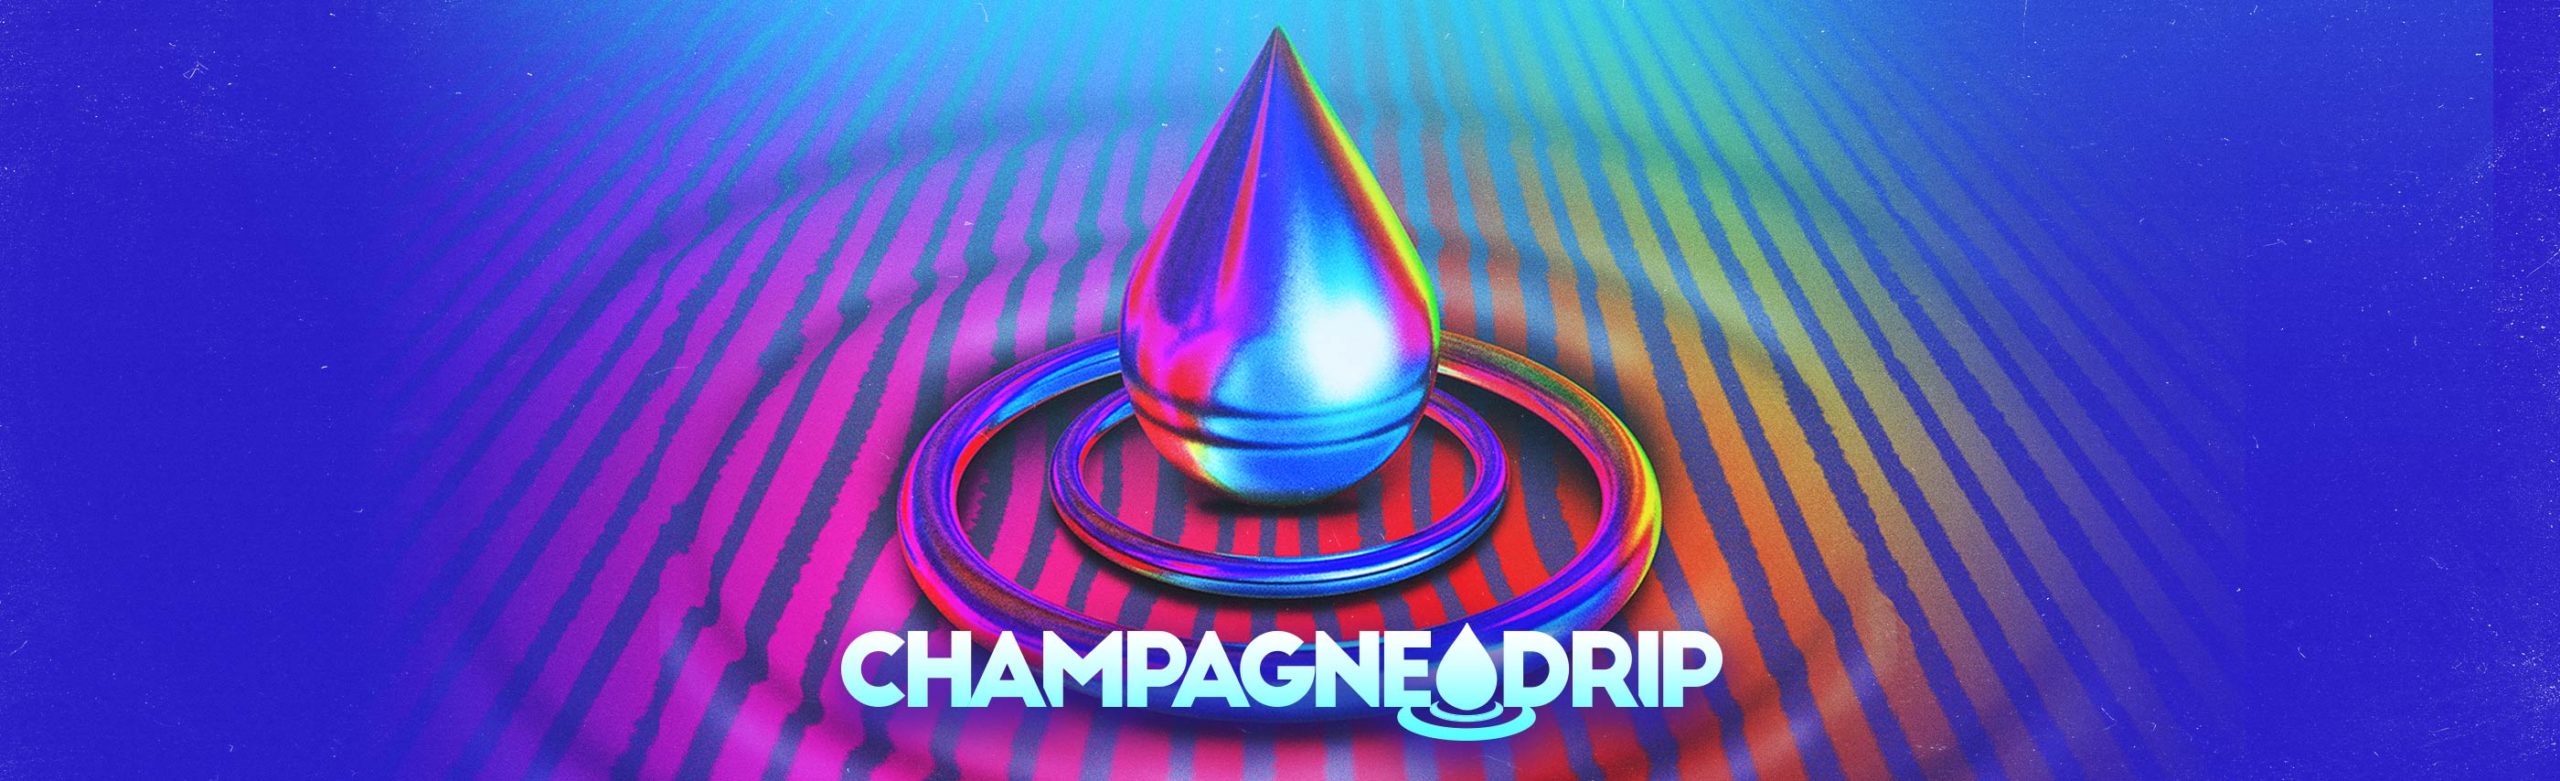 Champagne Drip